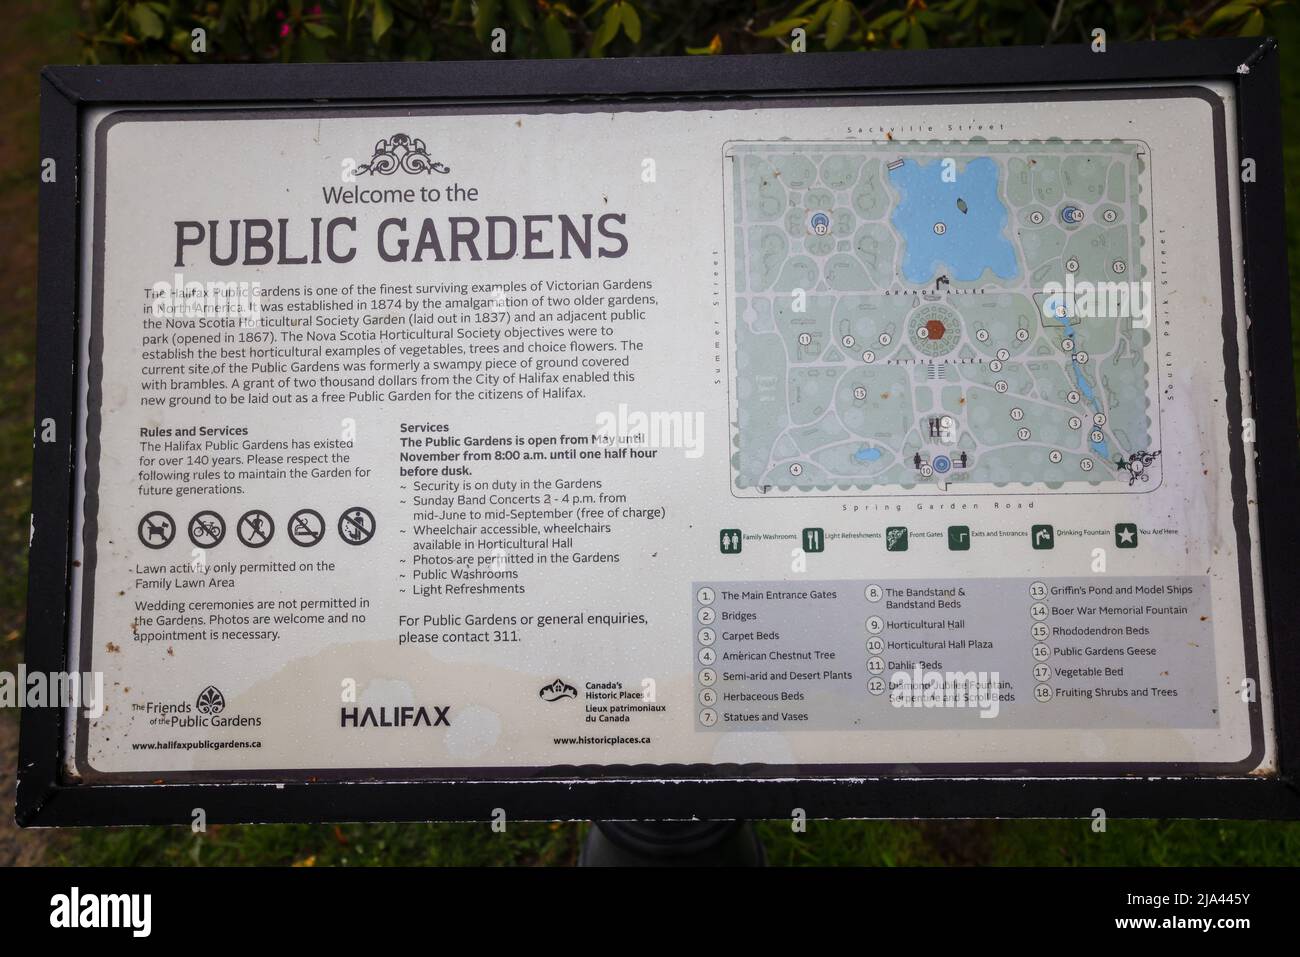 Information board of tourist interest or useful information Halifax Public Garden, Spring Garden Road, HALIFAX, NOVA SCOTIA - MAY 2022 Stock Photo